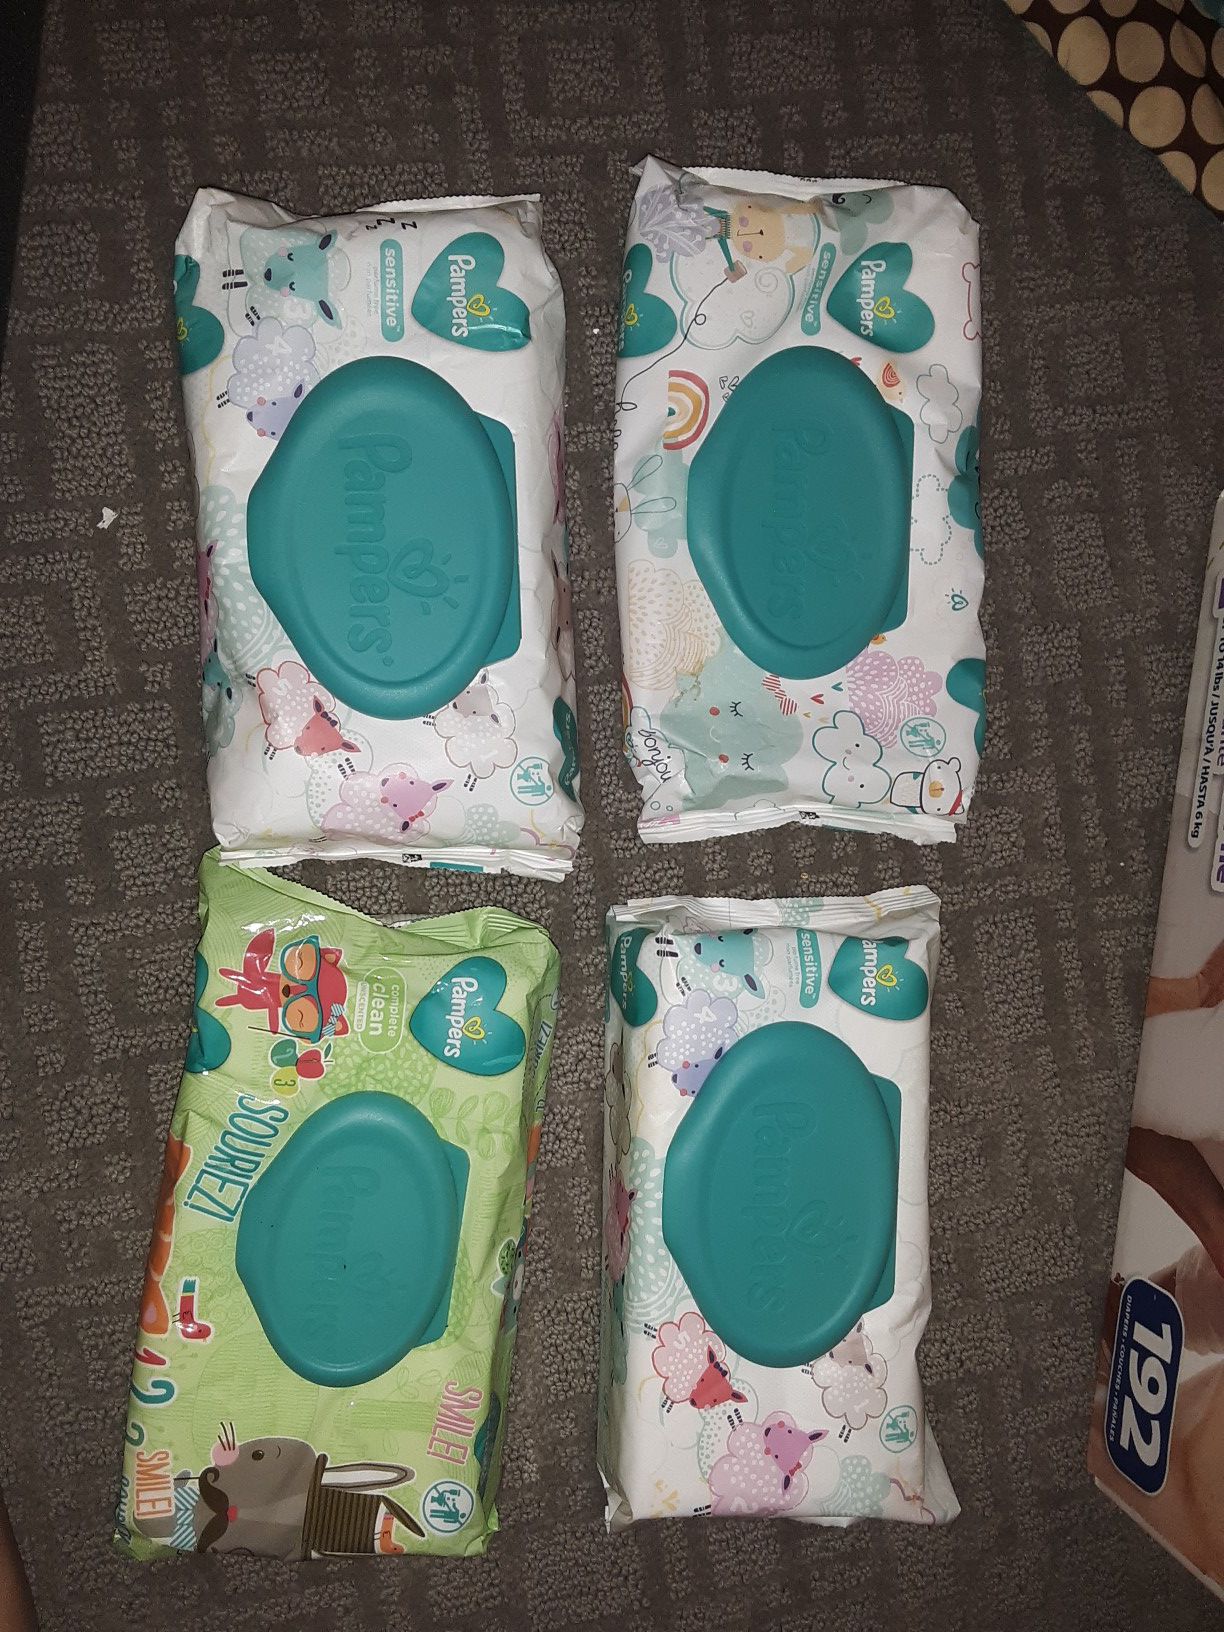 4 packs of Baby wipes